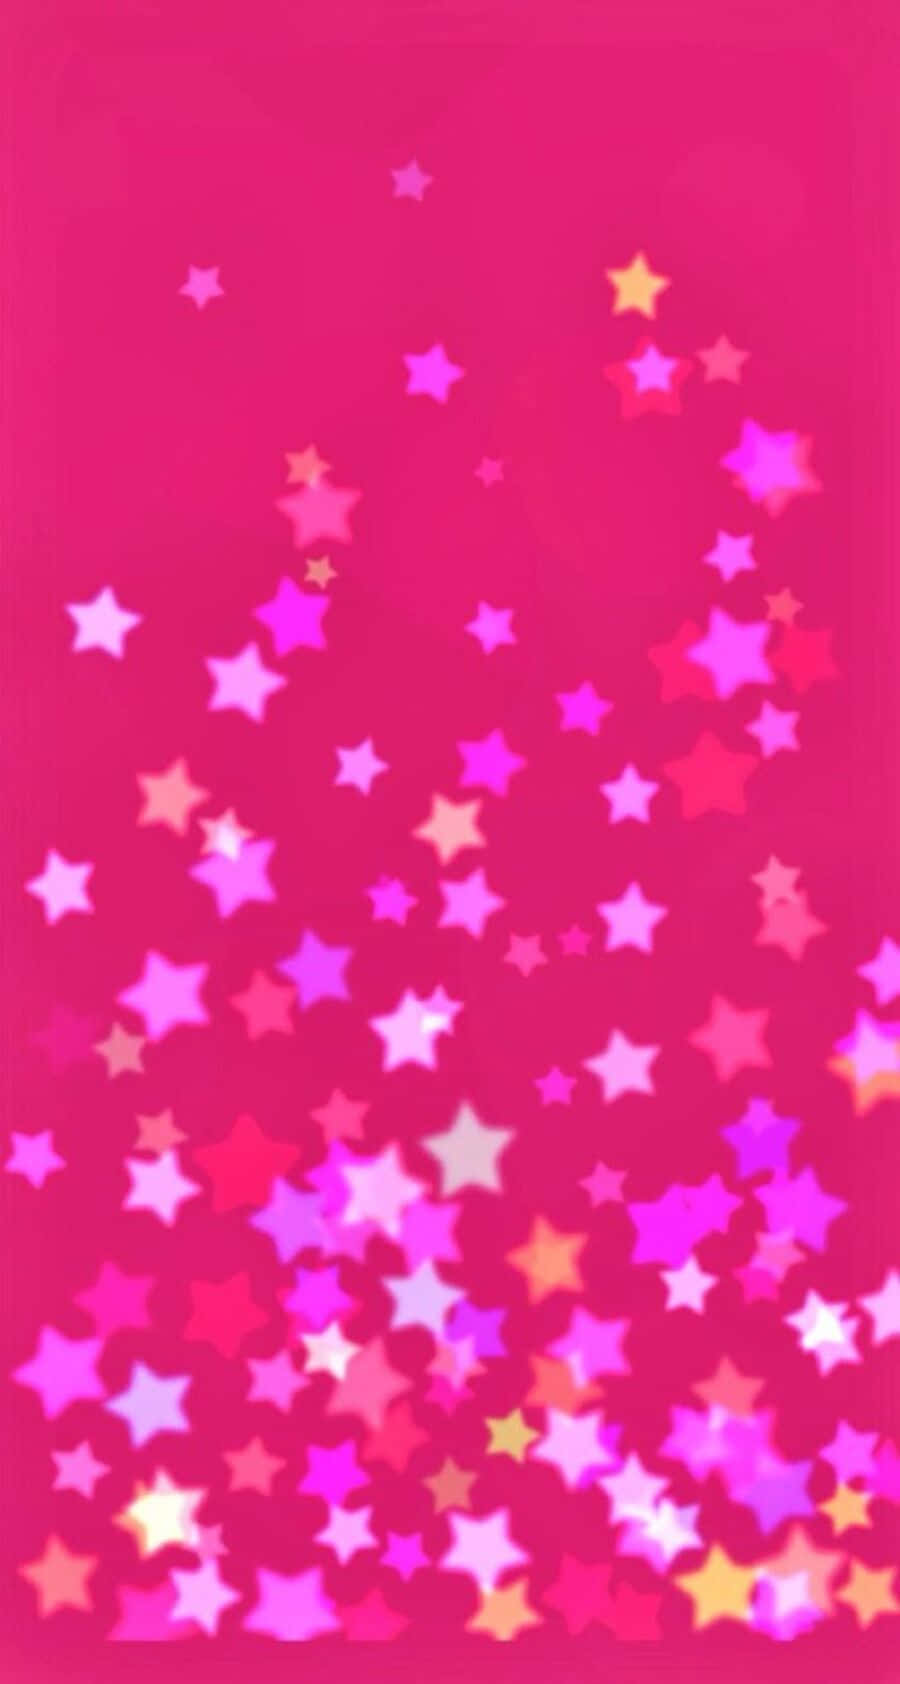 Dreamy Pink Stars In The Night Sky Wallpaper